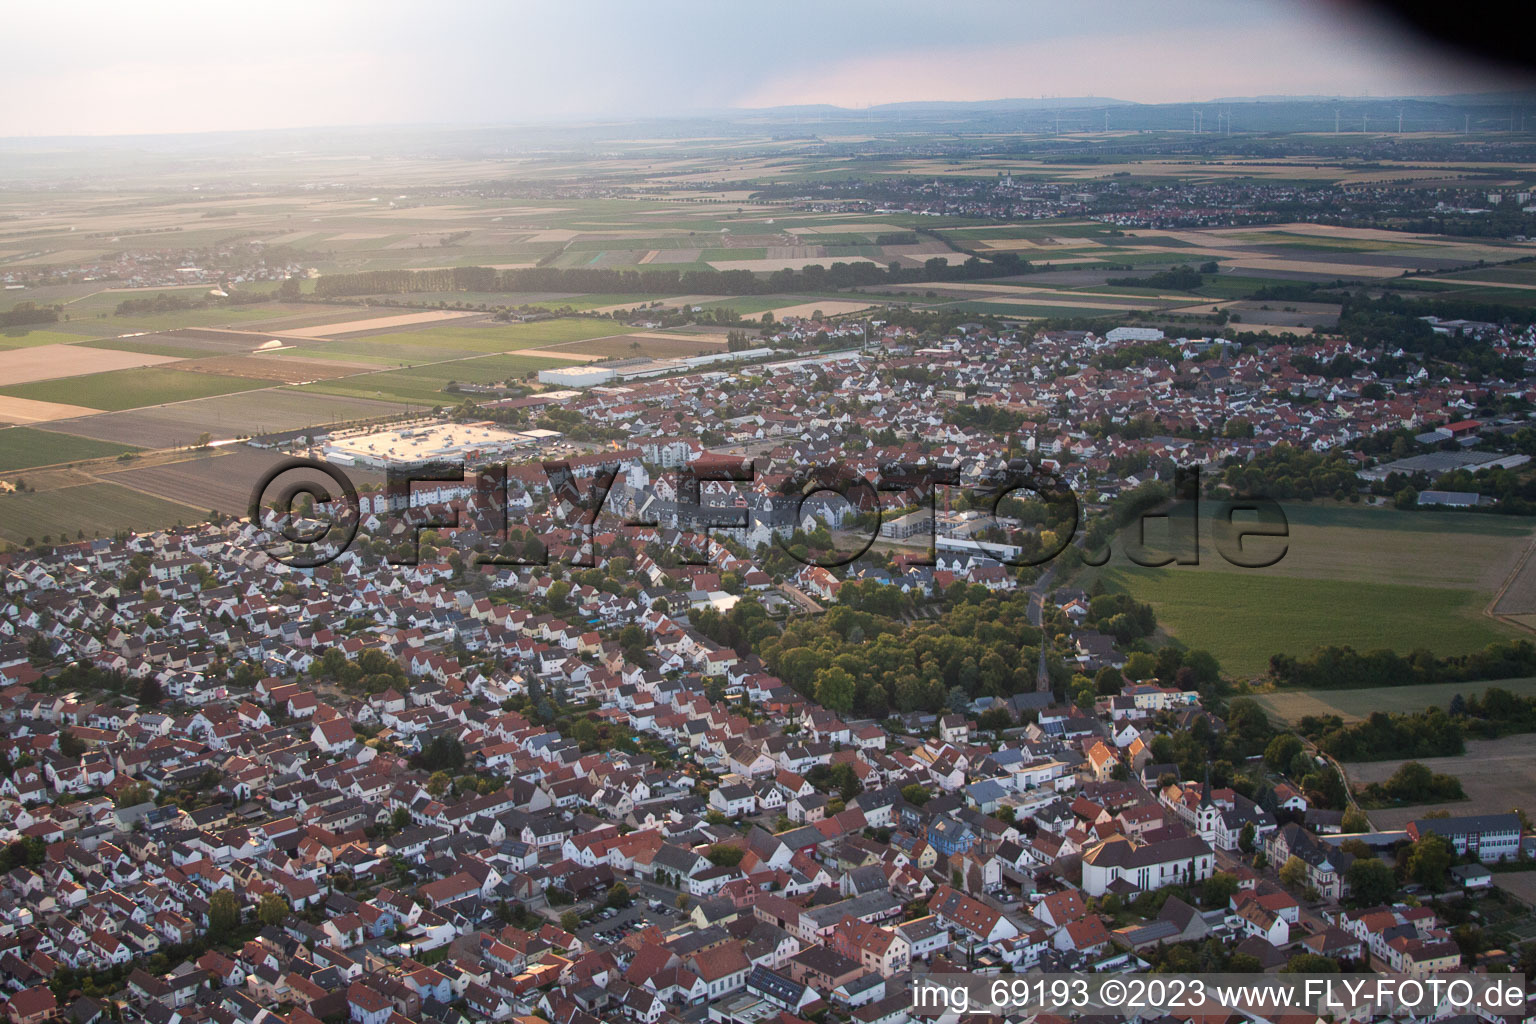 Drone recording of District Roxheim in Bobenheim-Roxheim in the state Rhineland-Palatinate, Germany